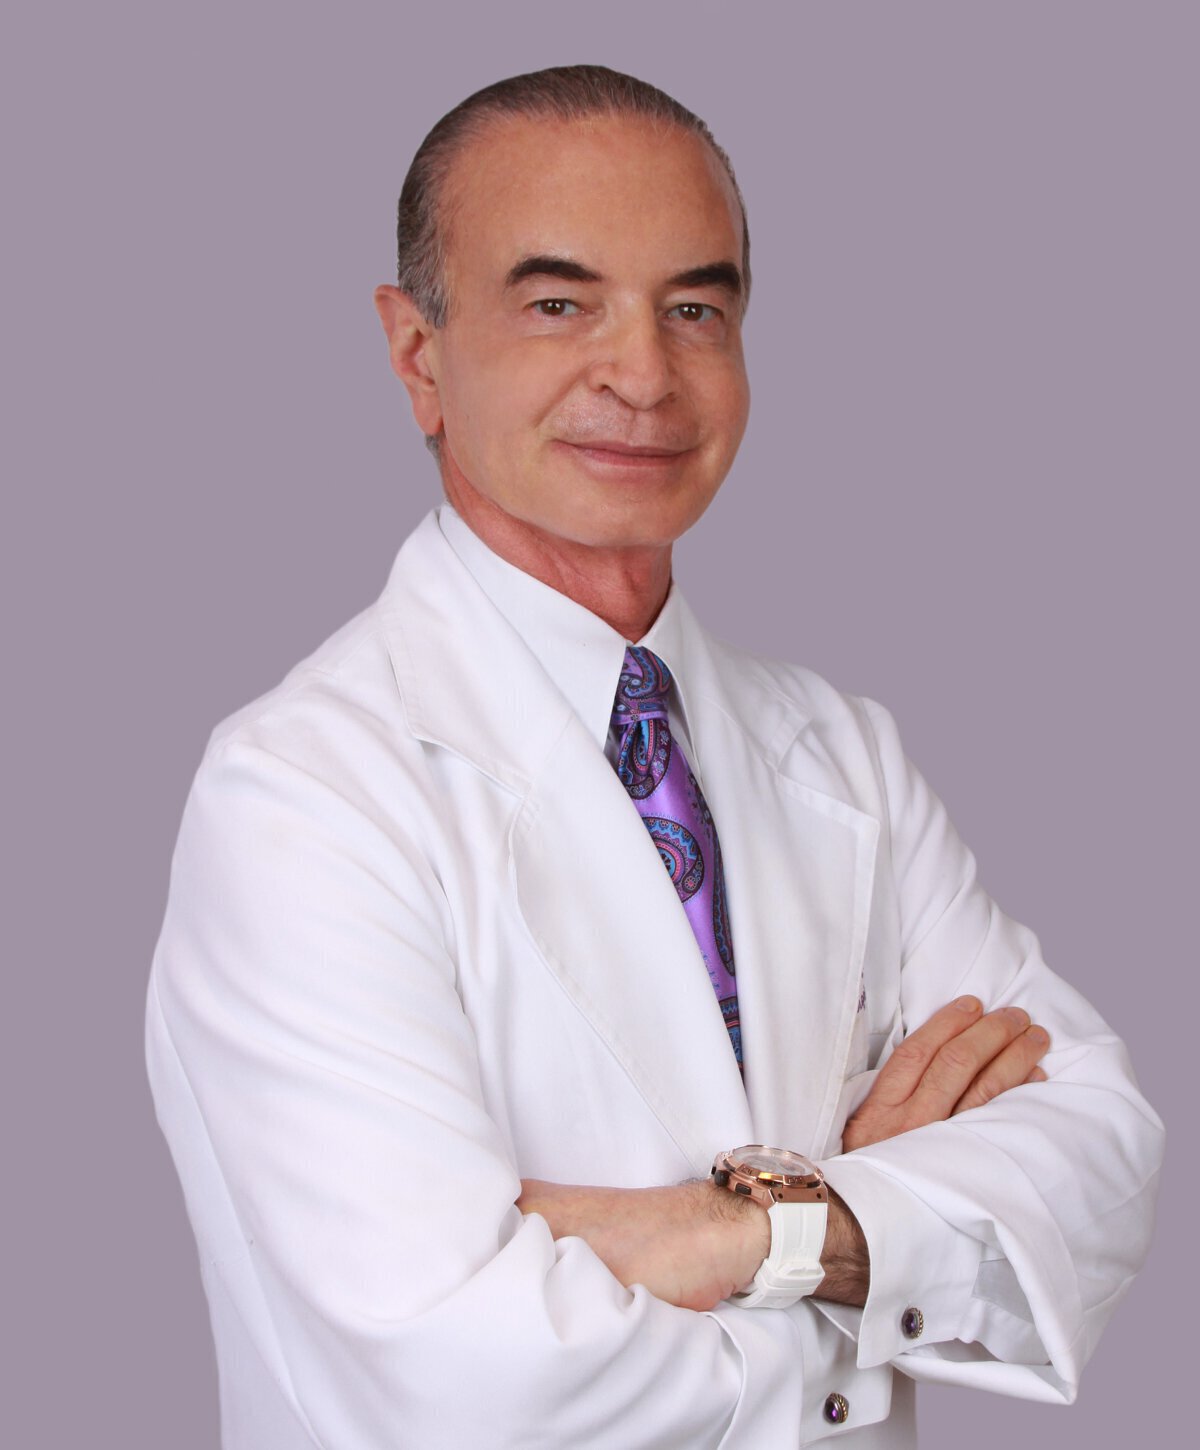 Irvine dermatologist Dr. Pilest